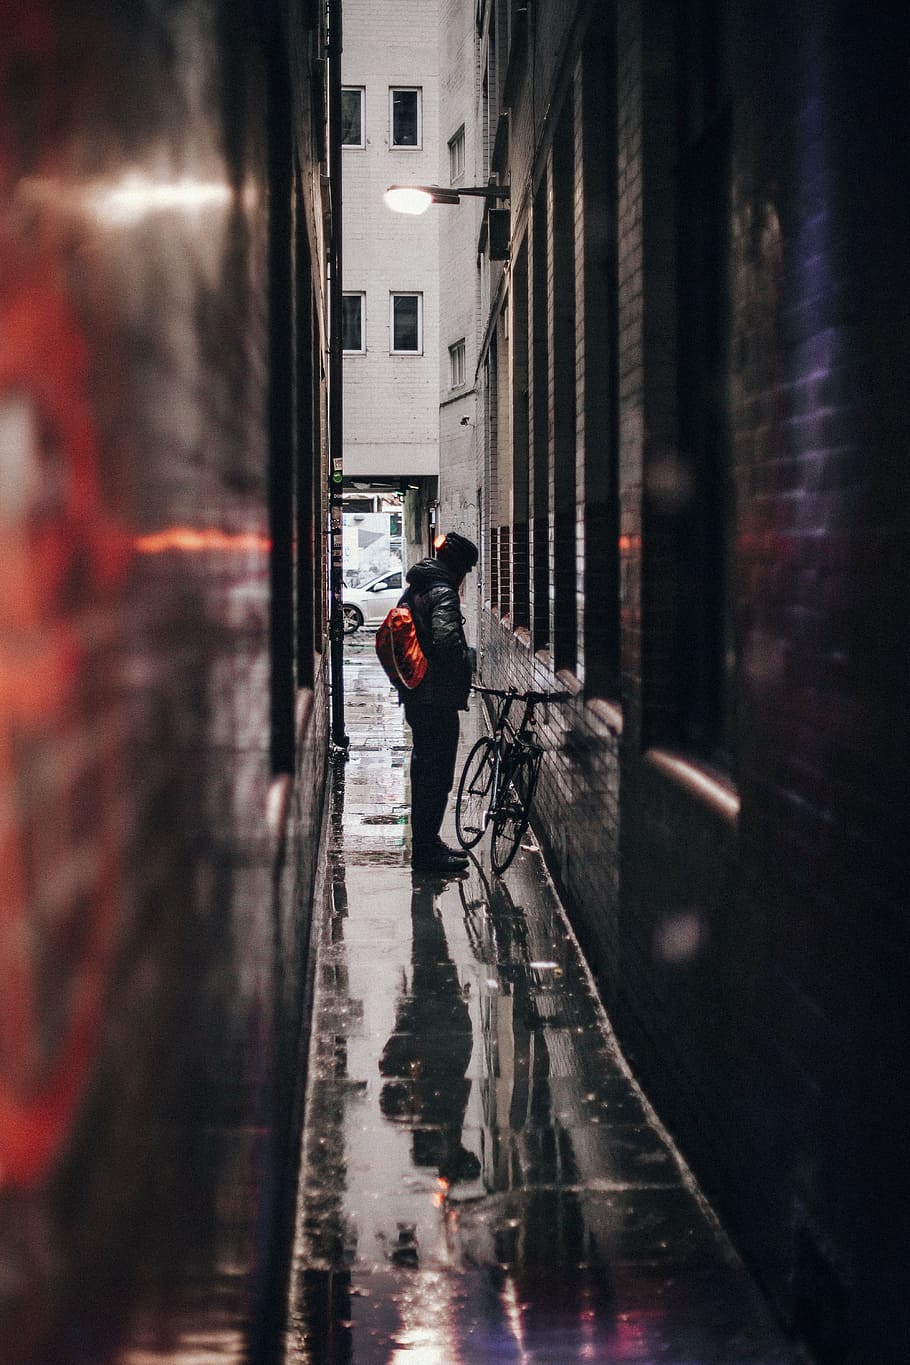 shallow, focus photography, man, standing, bike, people, alone, alley, sad, rain